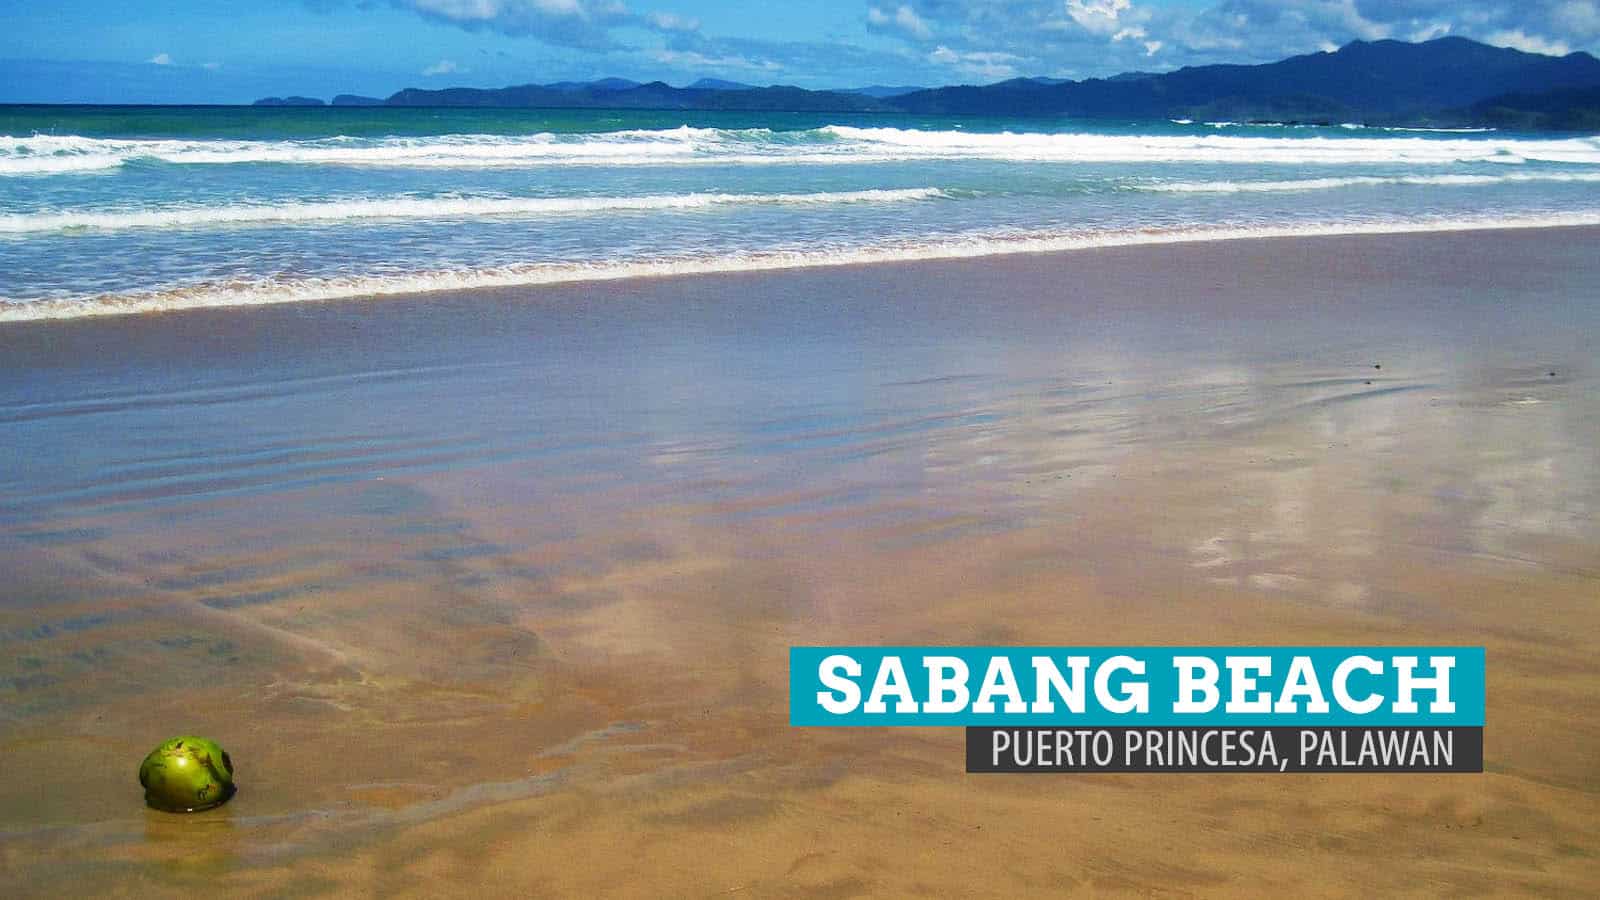 Sabang Beach: A Playful Day in Puerto Princesa, Palawan, Philippines